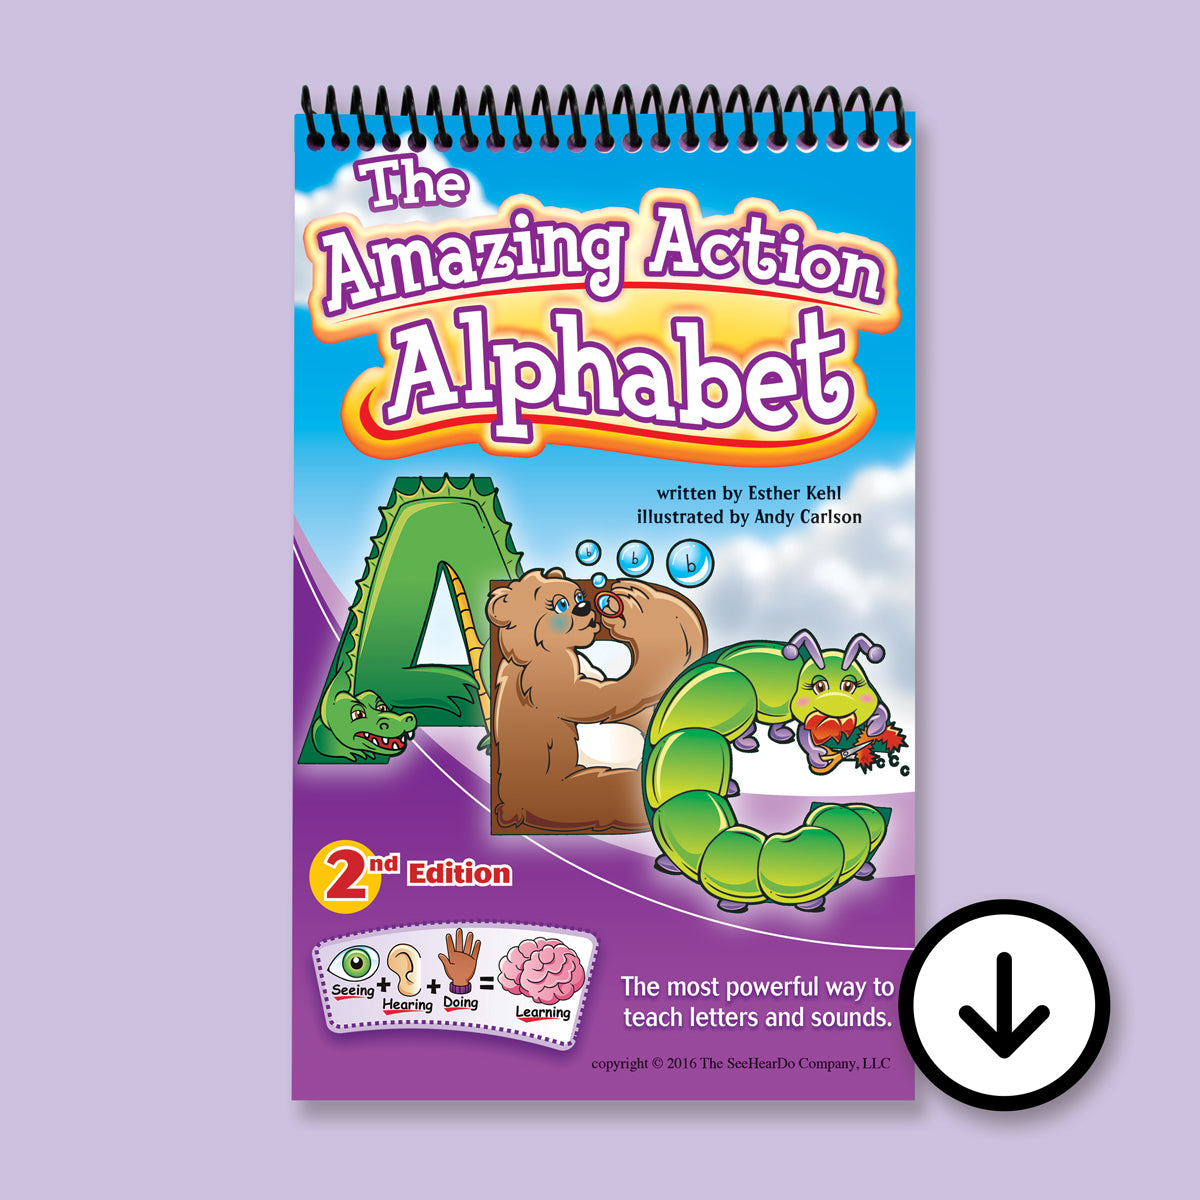 Alphabet Flip Books  Education to the Core